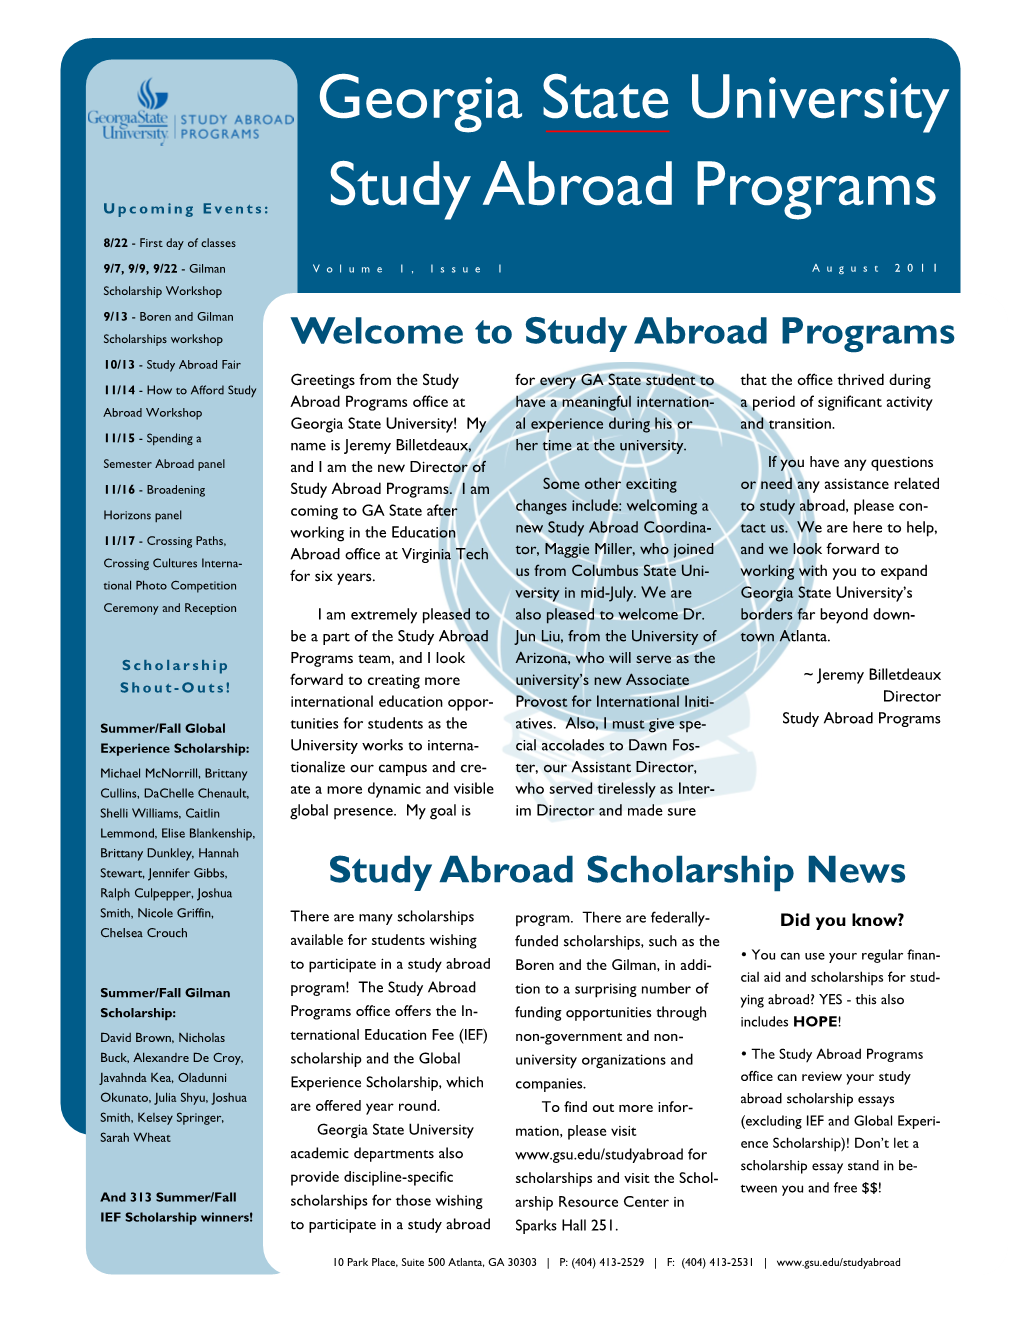 Georgia State University Study Abroad Programs